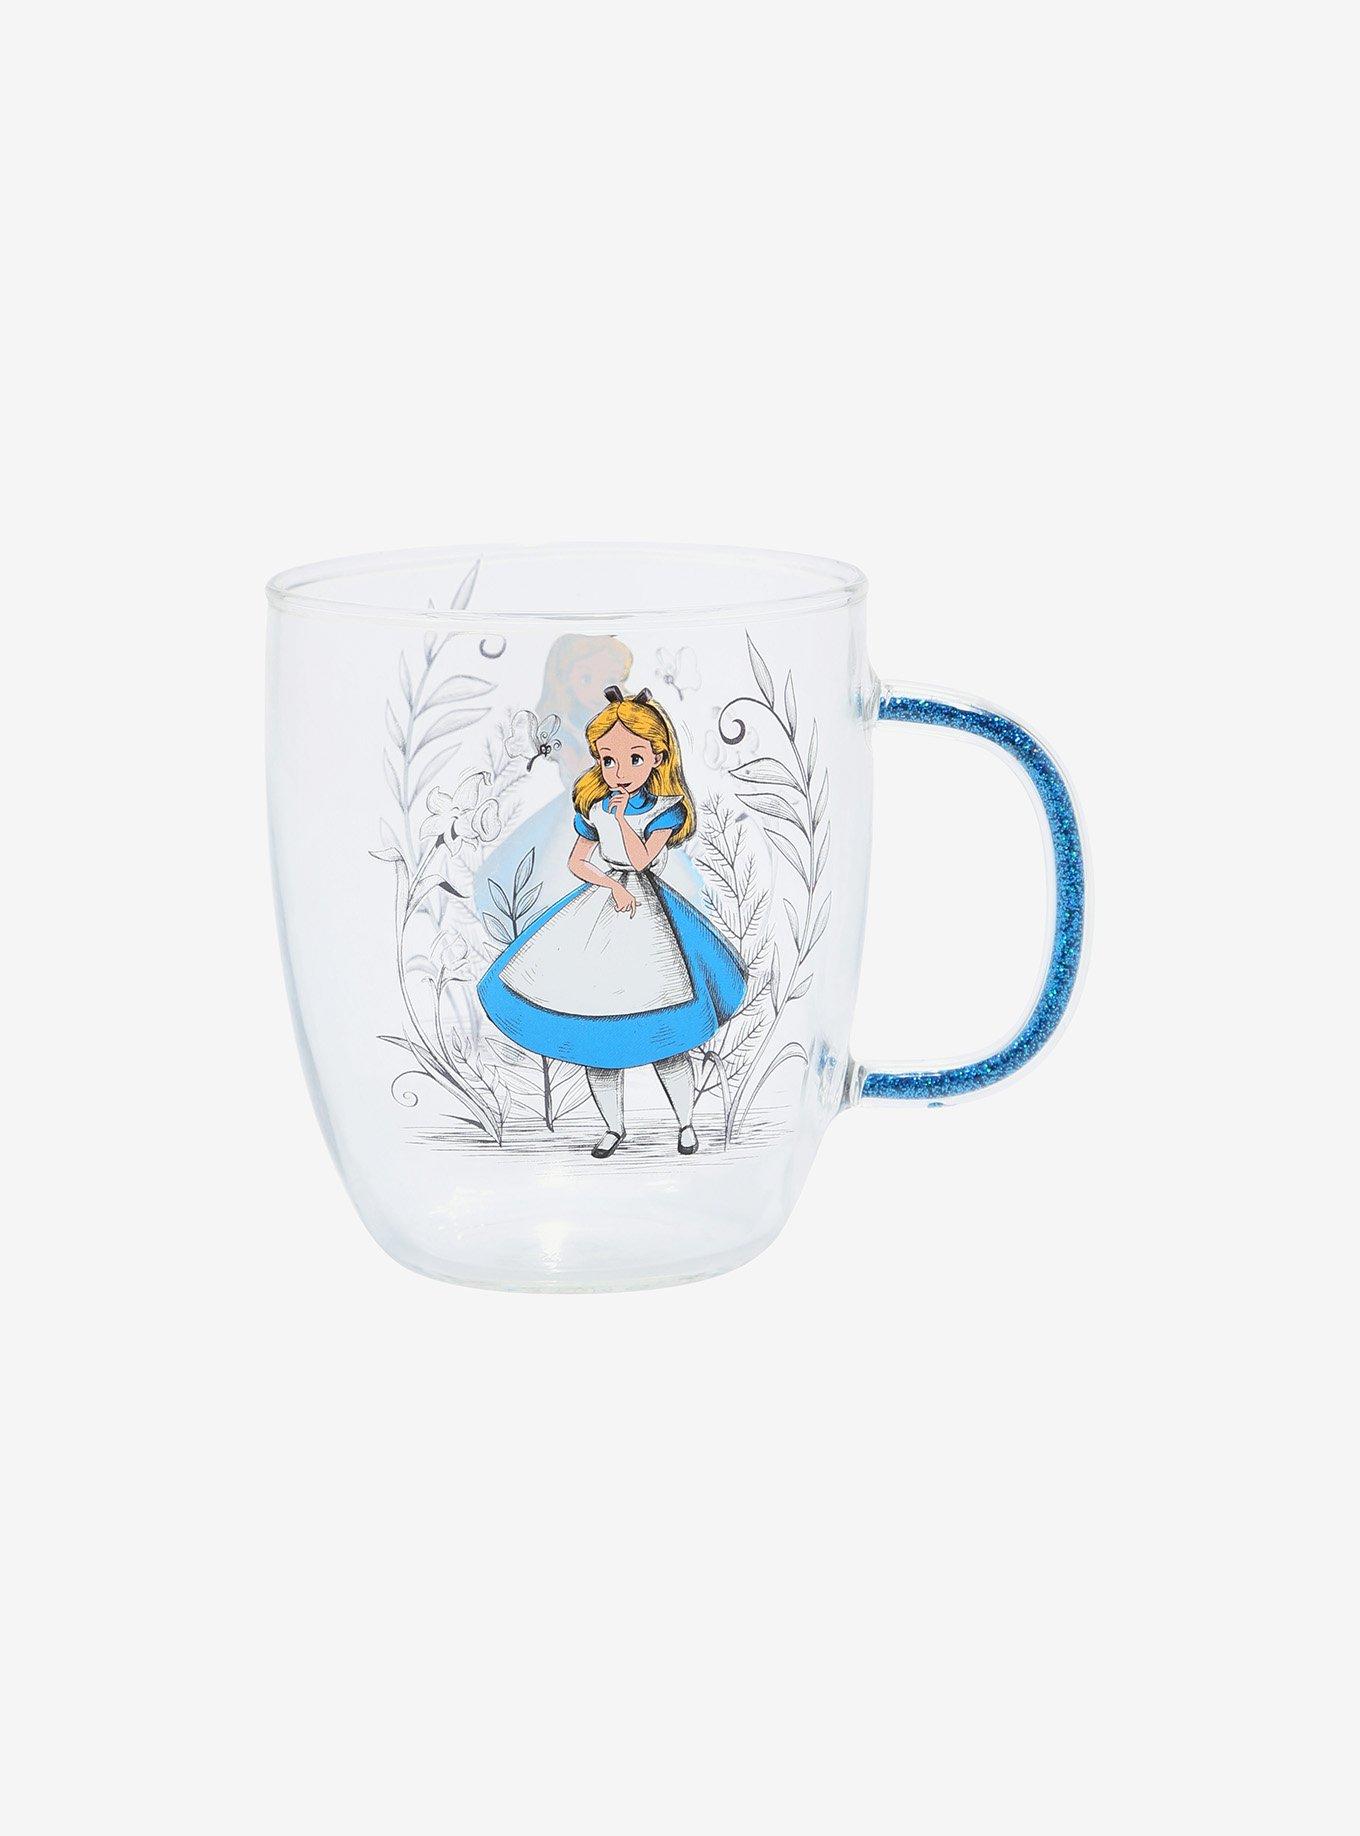 Alice's Adventures in Wonderland - Carroll - 15 oz Ceramic Mug - Well Told